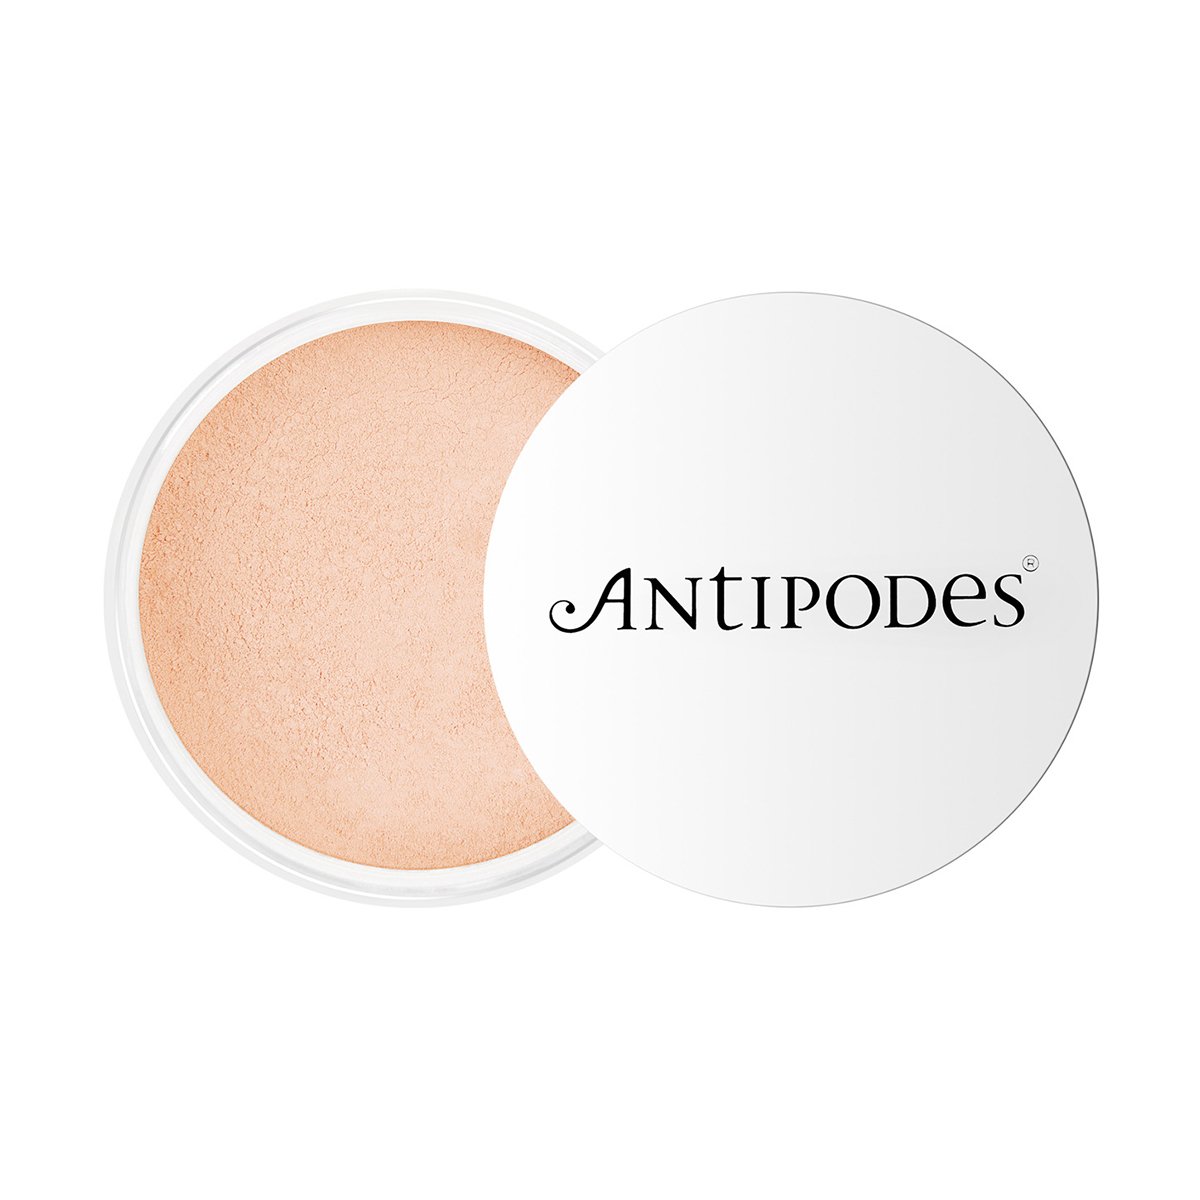 Antipodes Mineral Foundation 01 Pale Pink 11g / 0.37fl oz